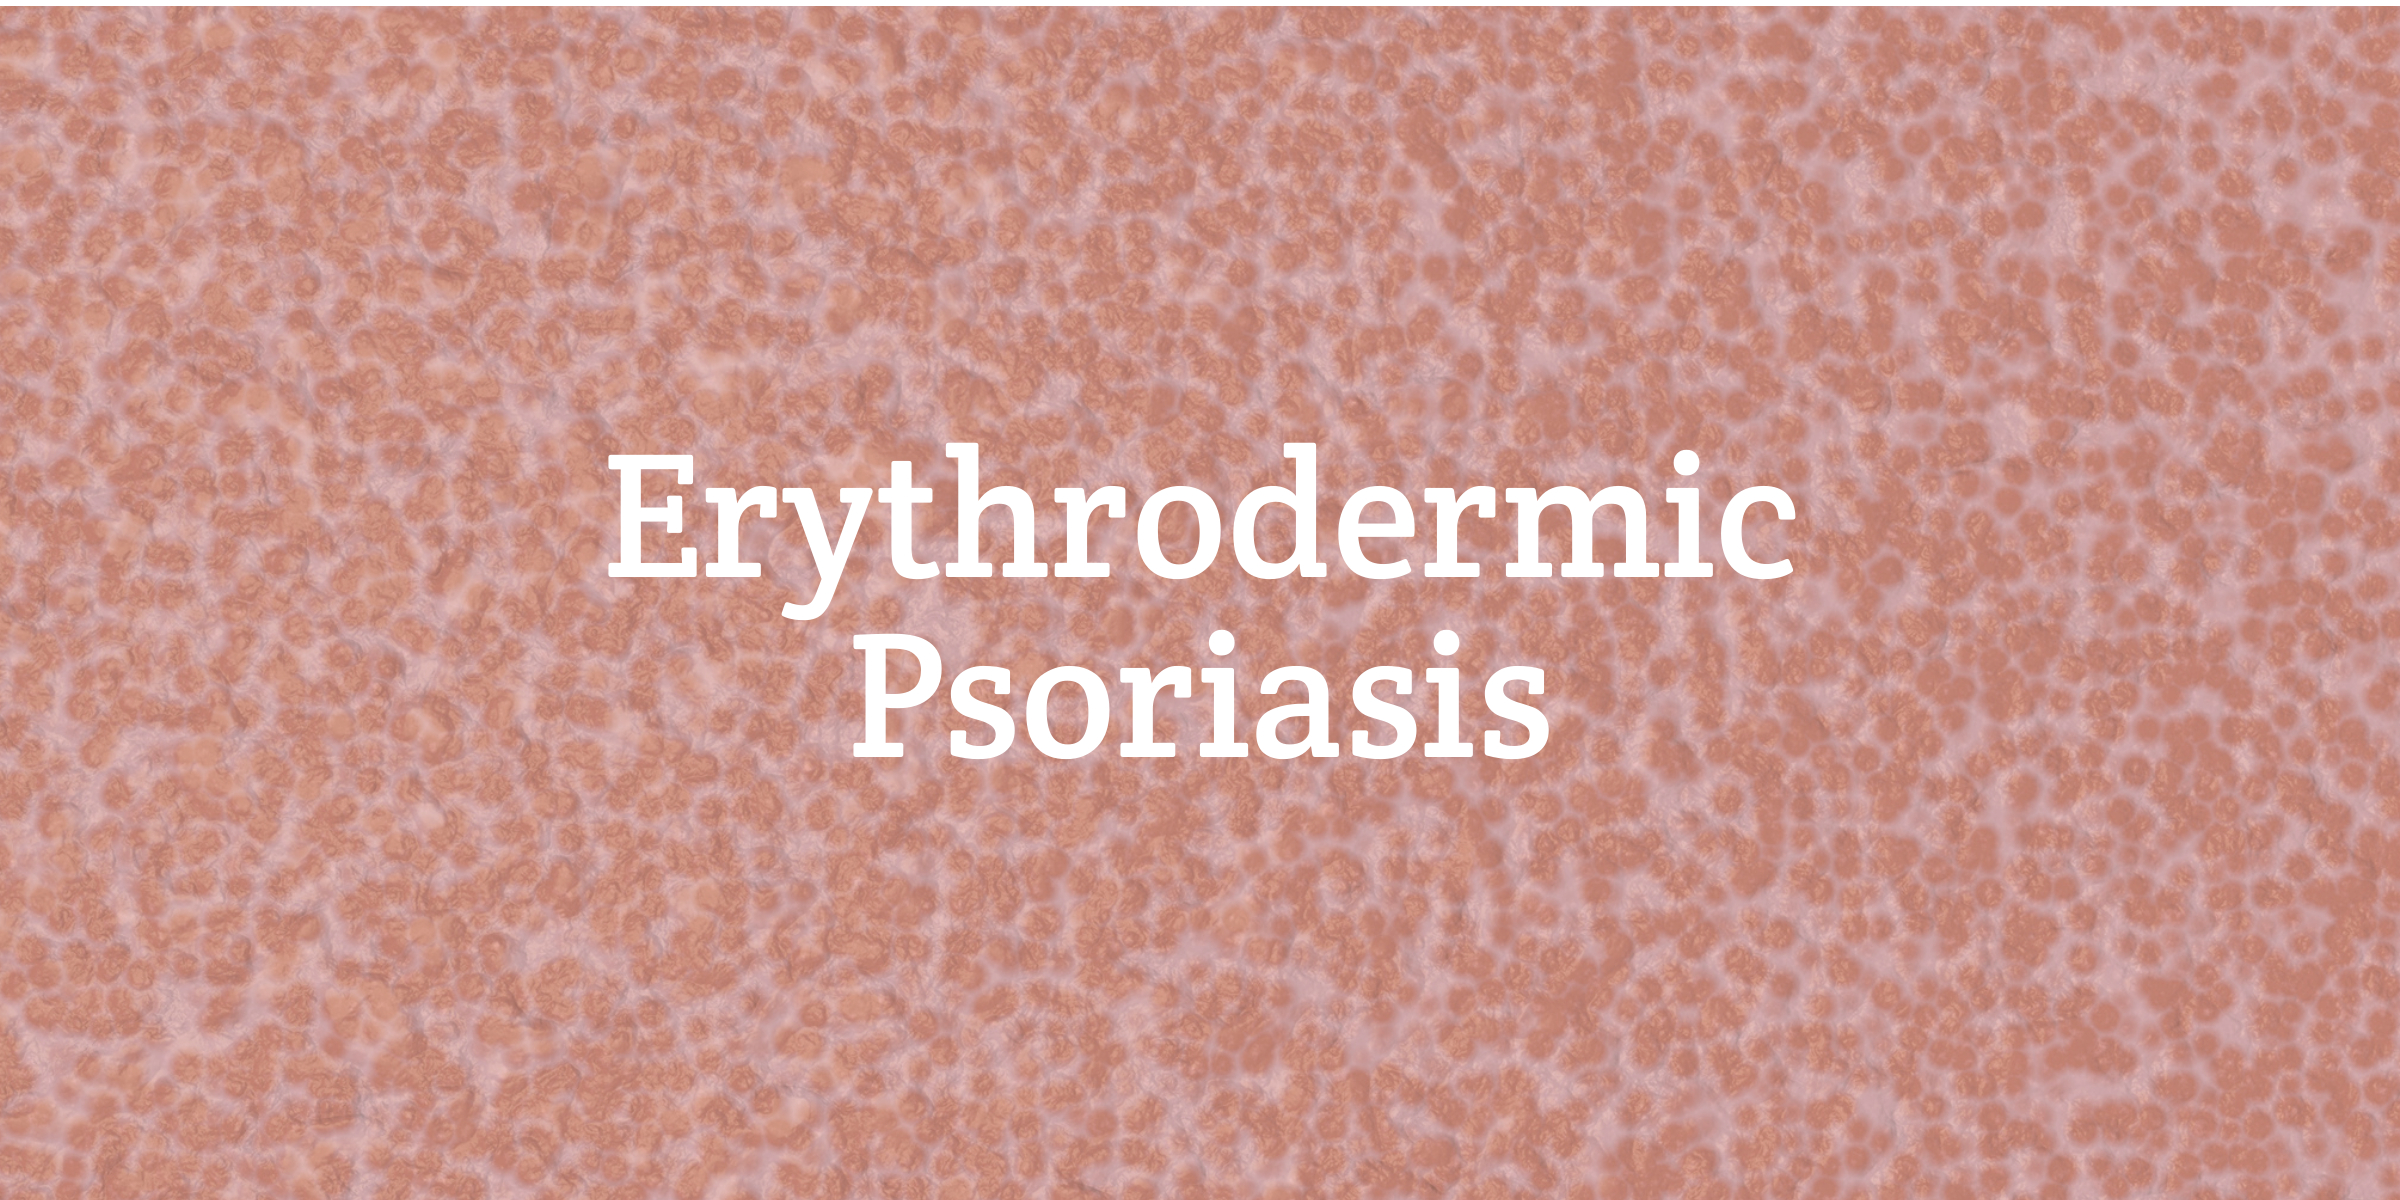 Erythrodermic Psoriasis Treatment